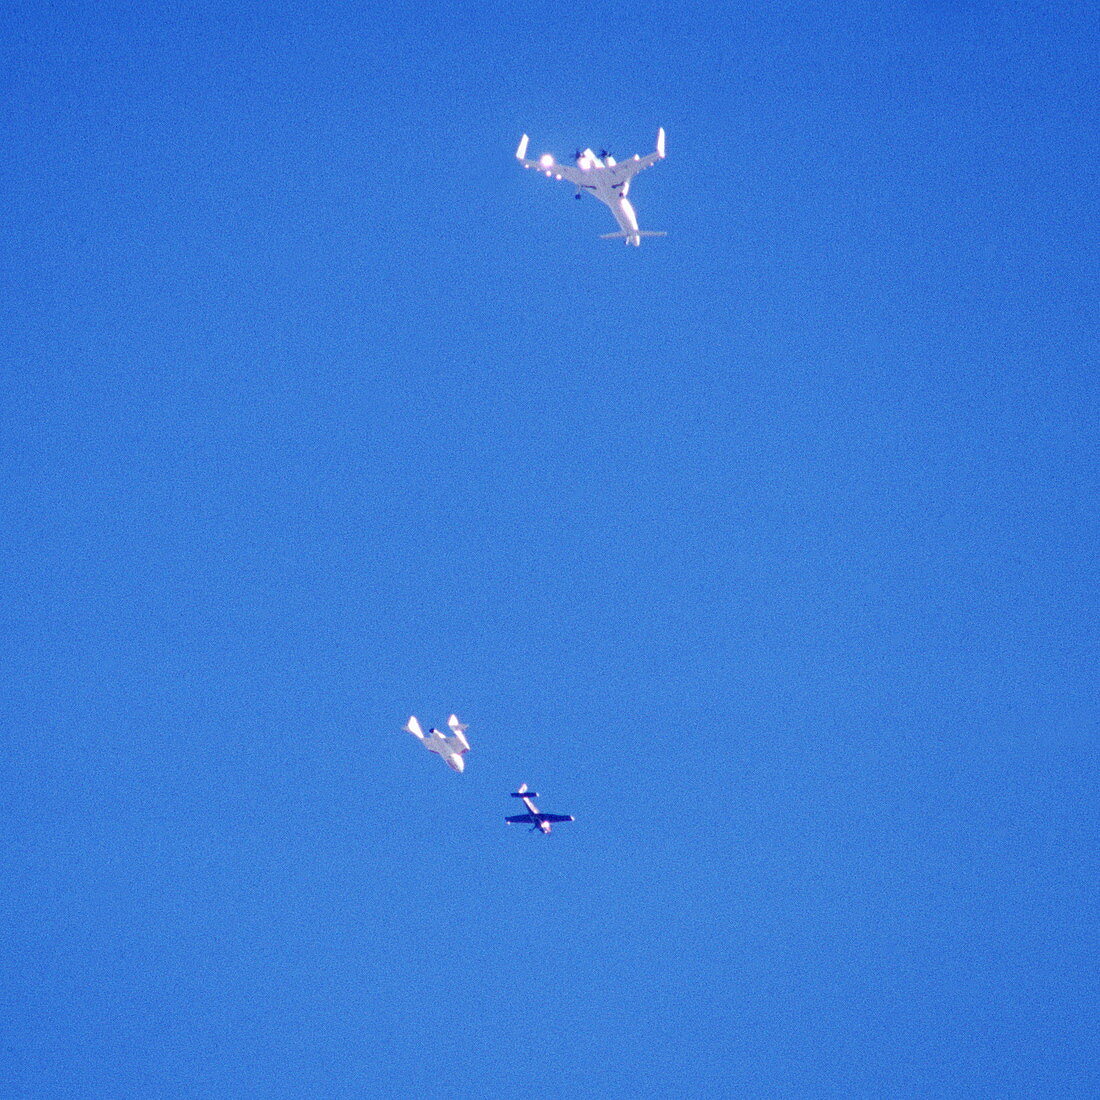 SpaceShipOne flight